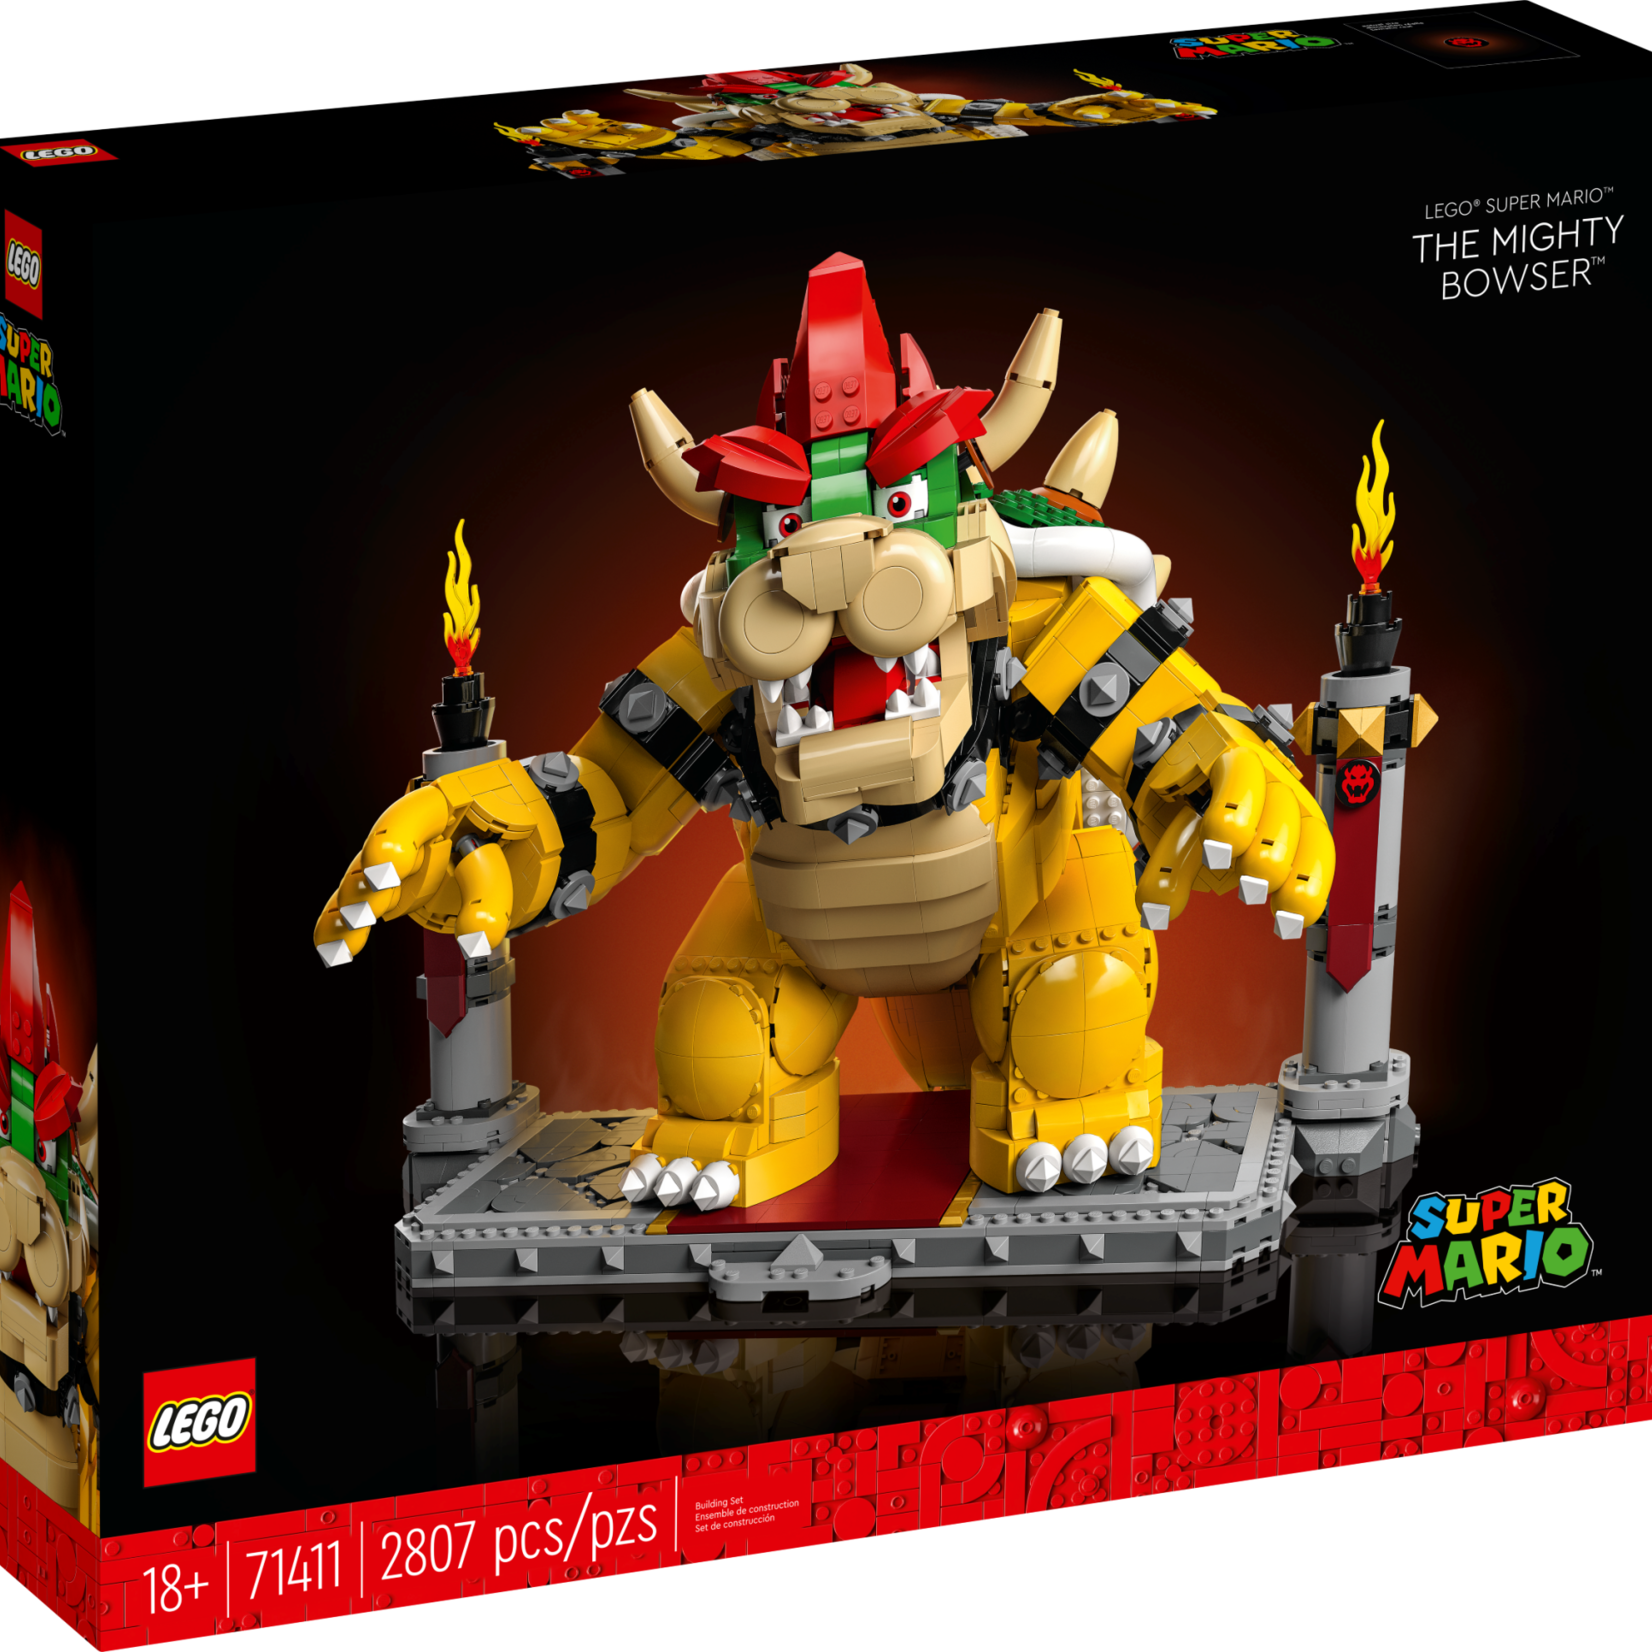 Lego Lego Super Mario 71411 - Le Mighty Bowser